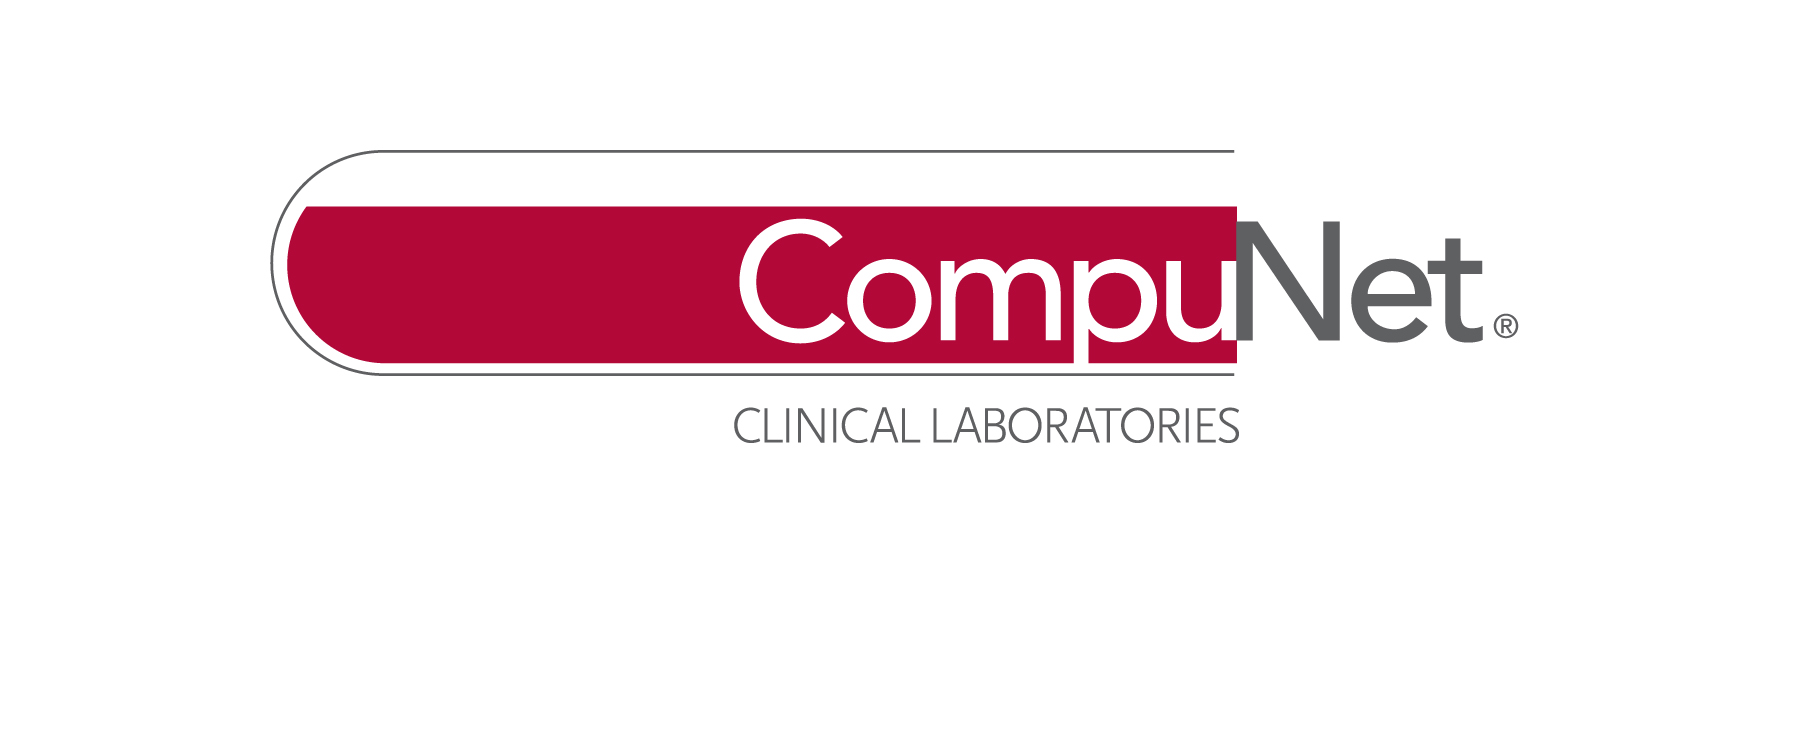 Compunet Clinical Laboratories